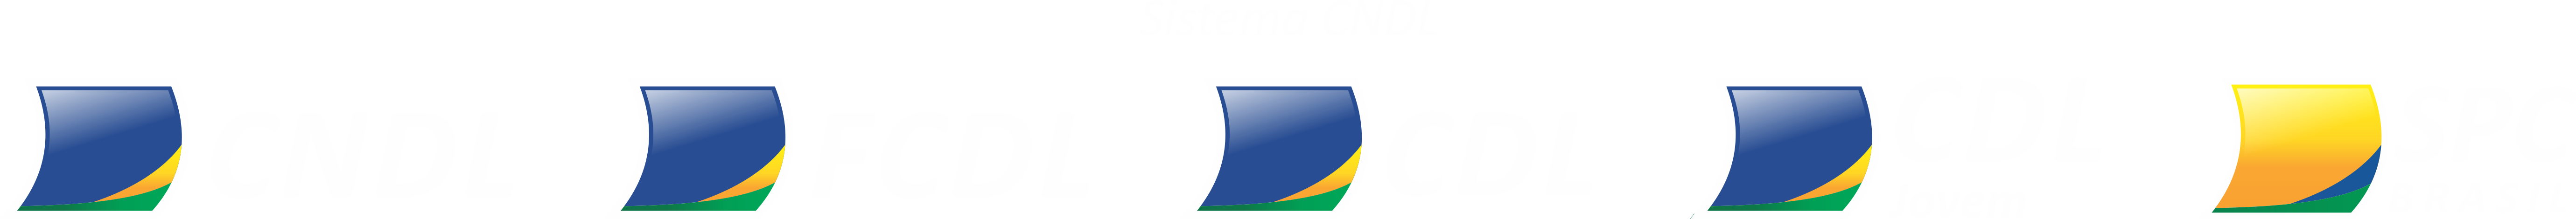 Sistema CNDL - logotipos